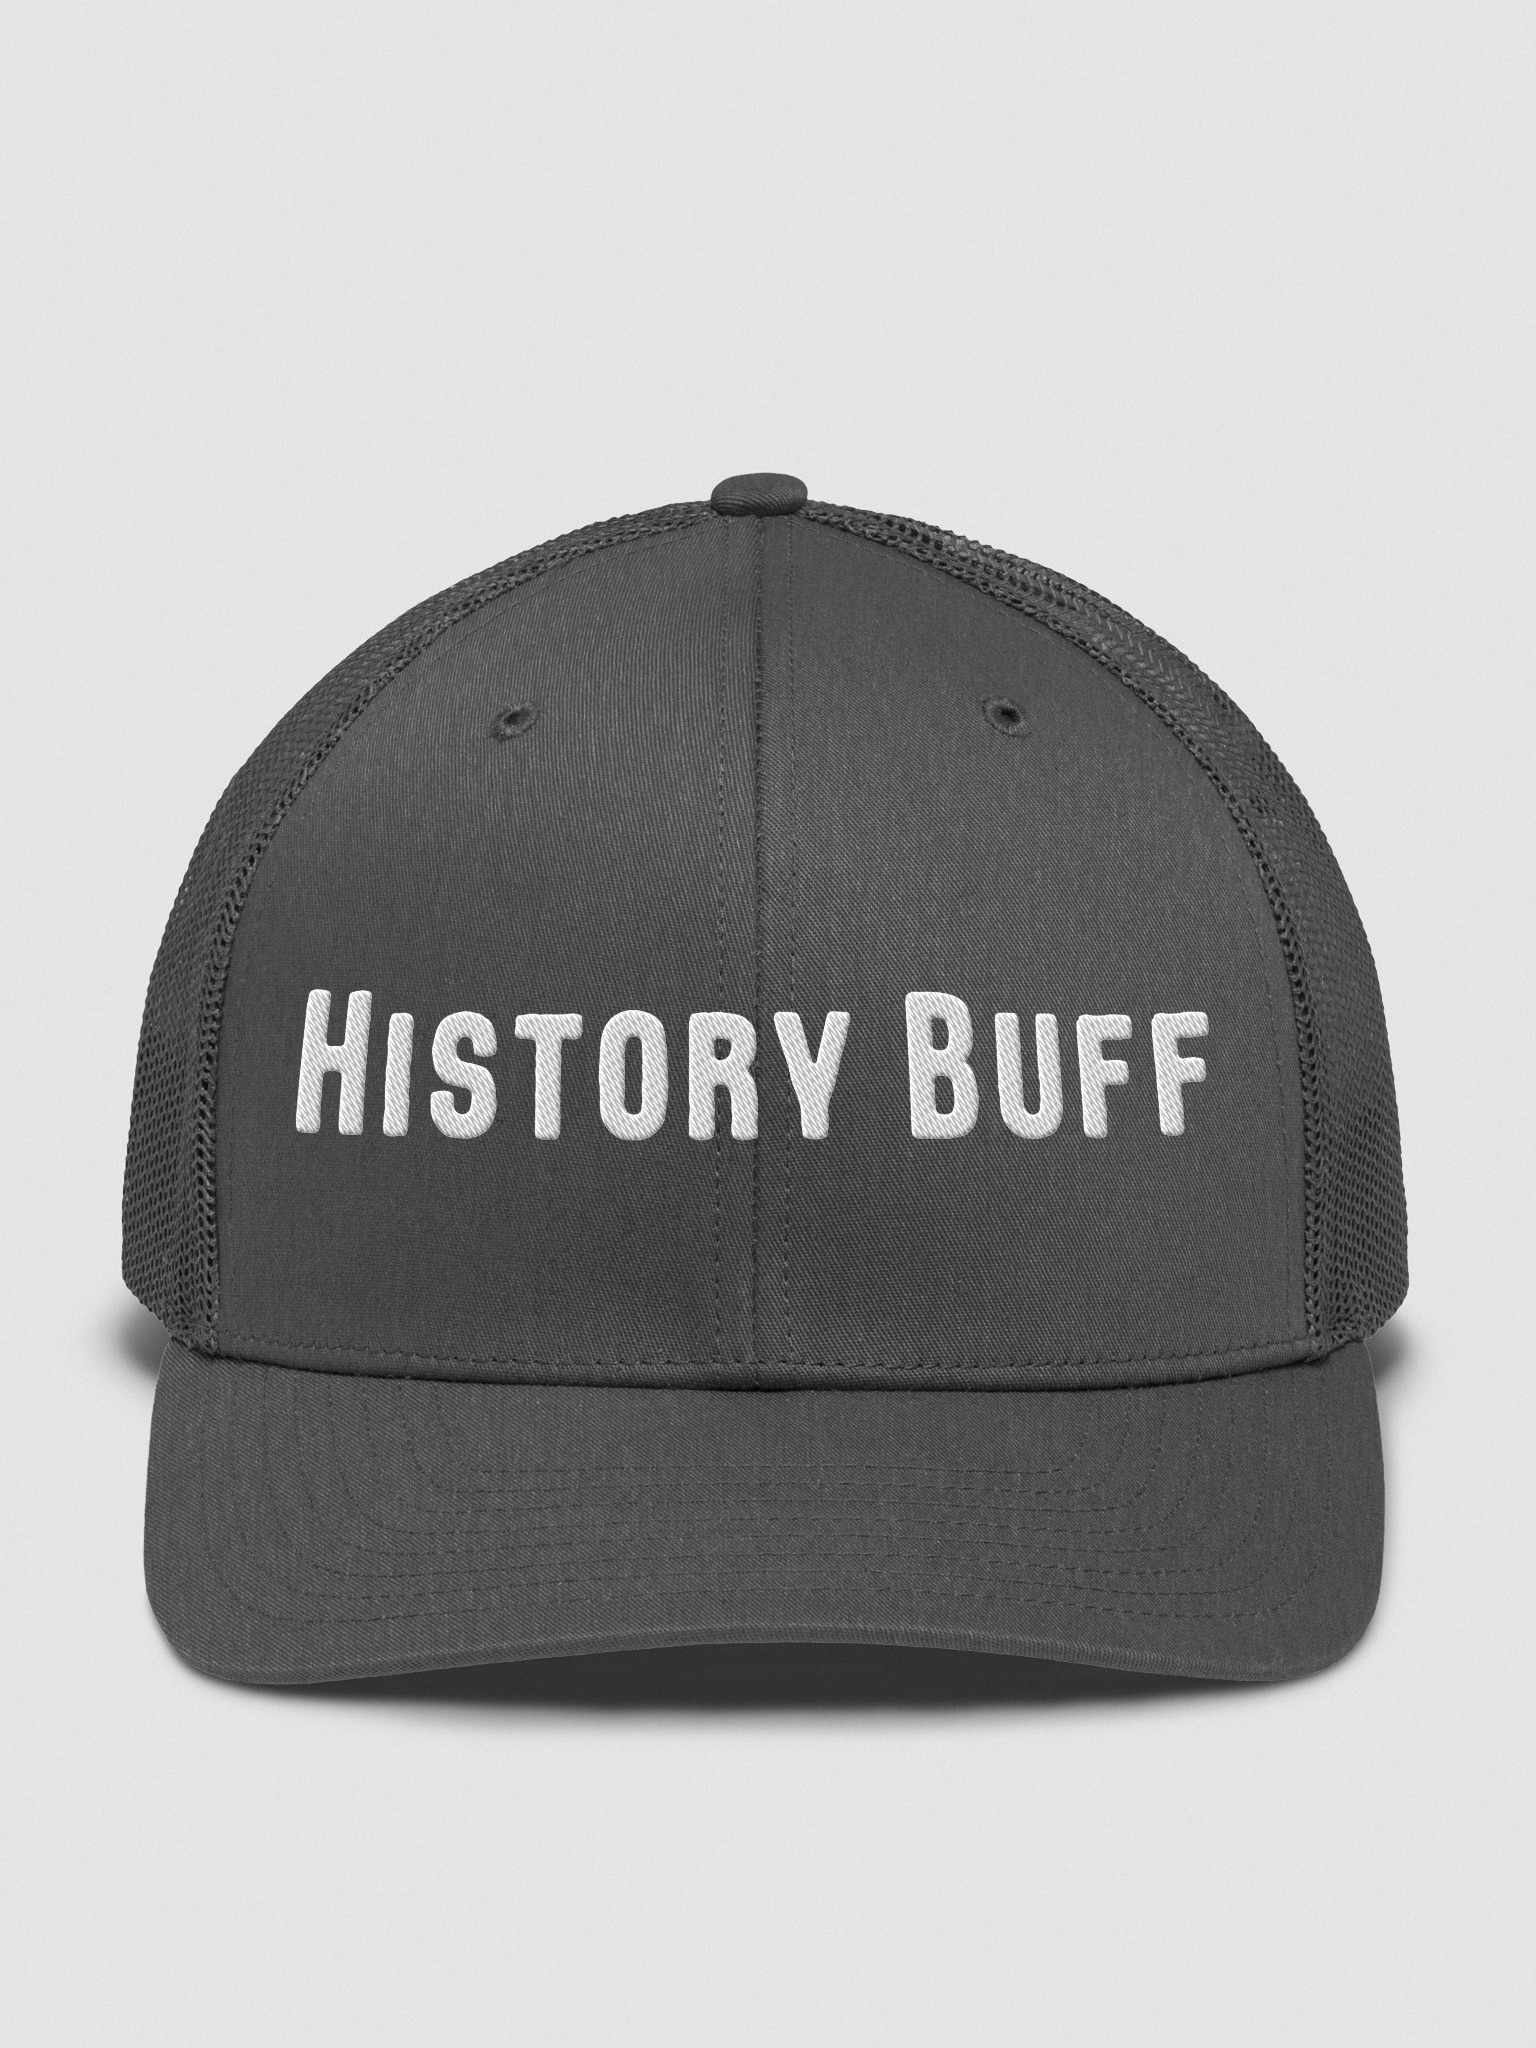 History Buff hat WalkwithHistory